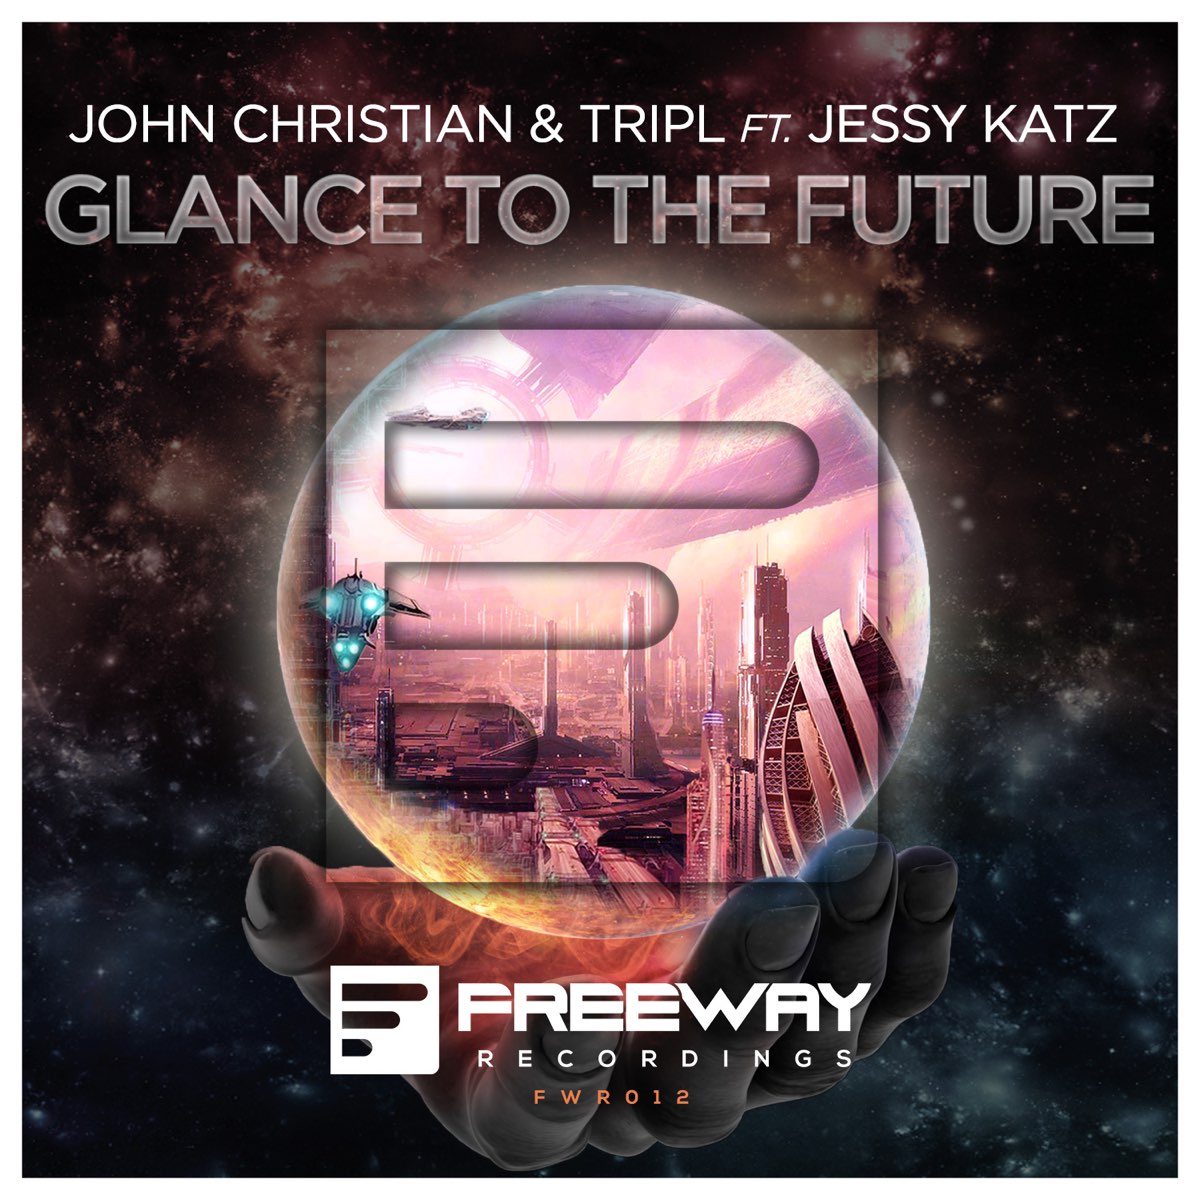 Ft future. John Christian. Children John Christian Remix.